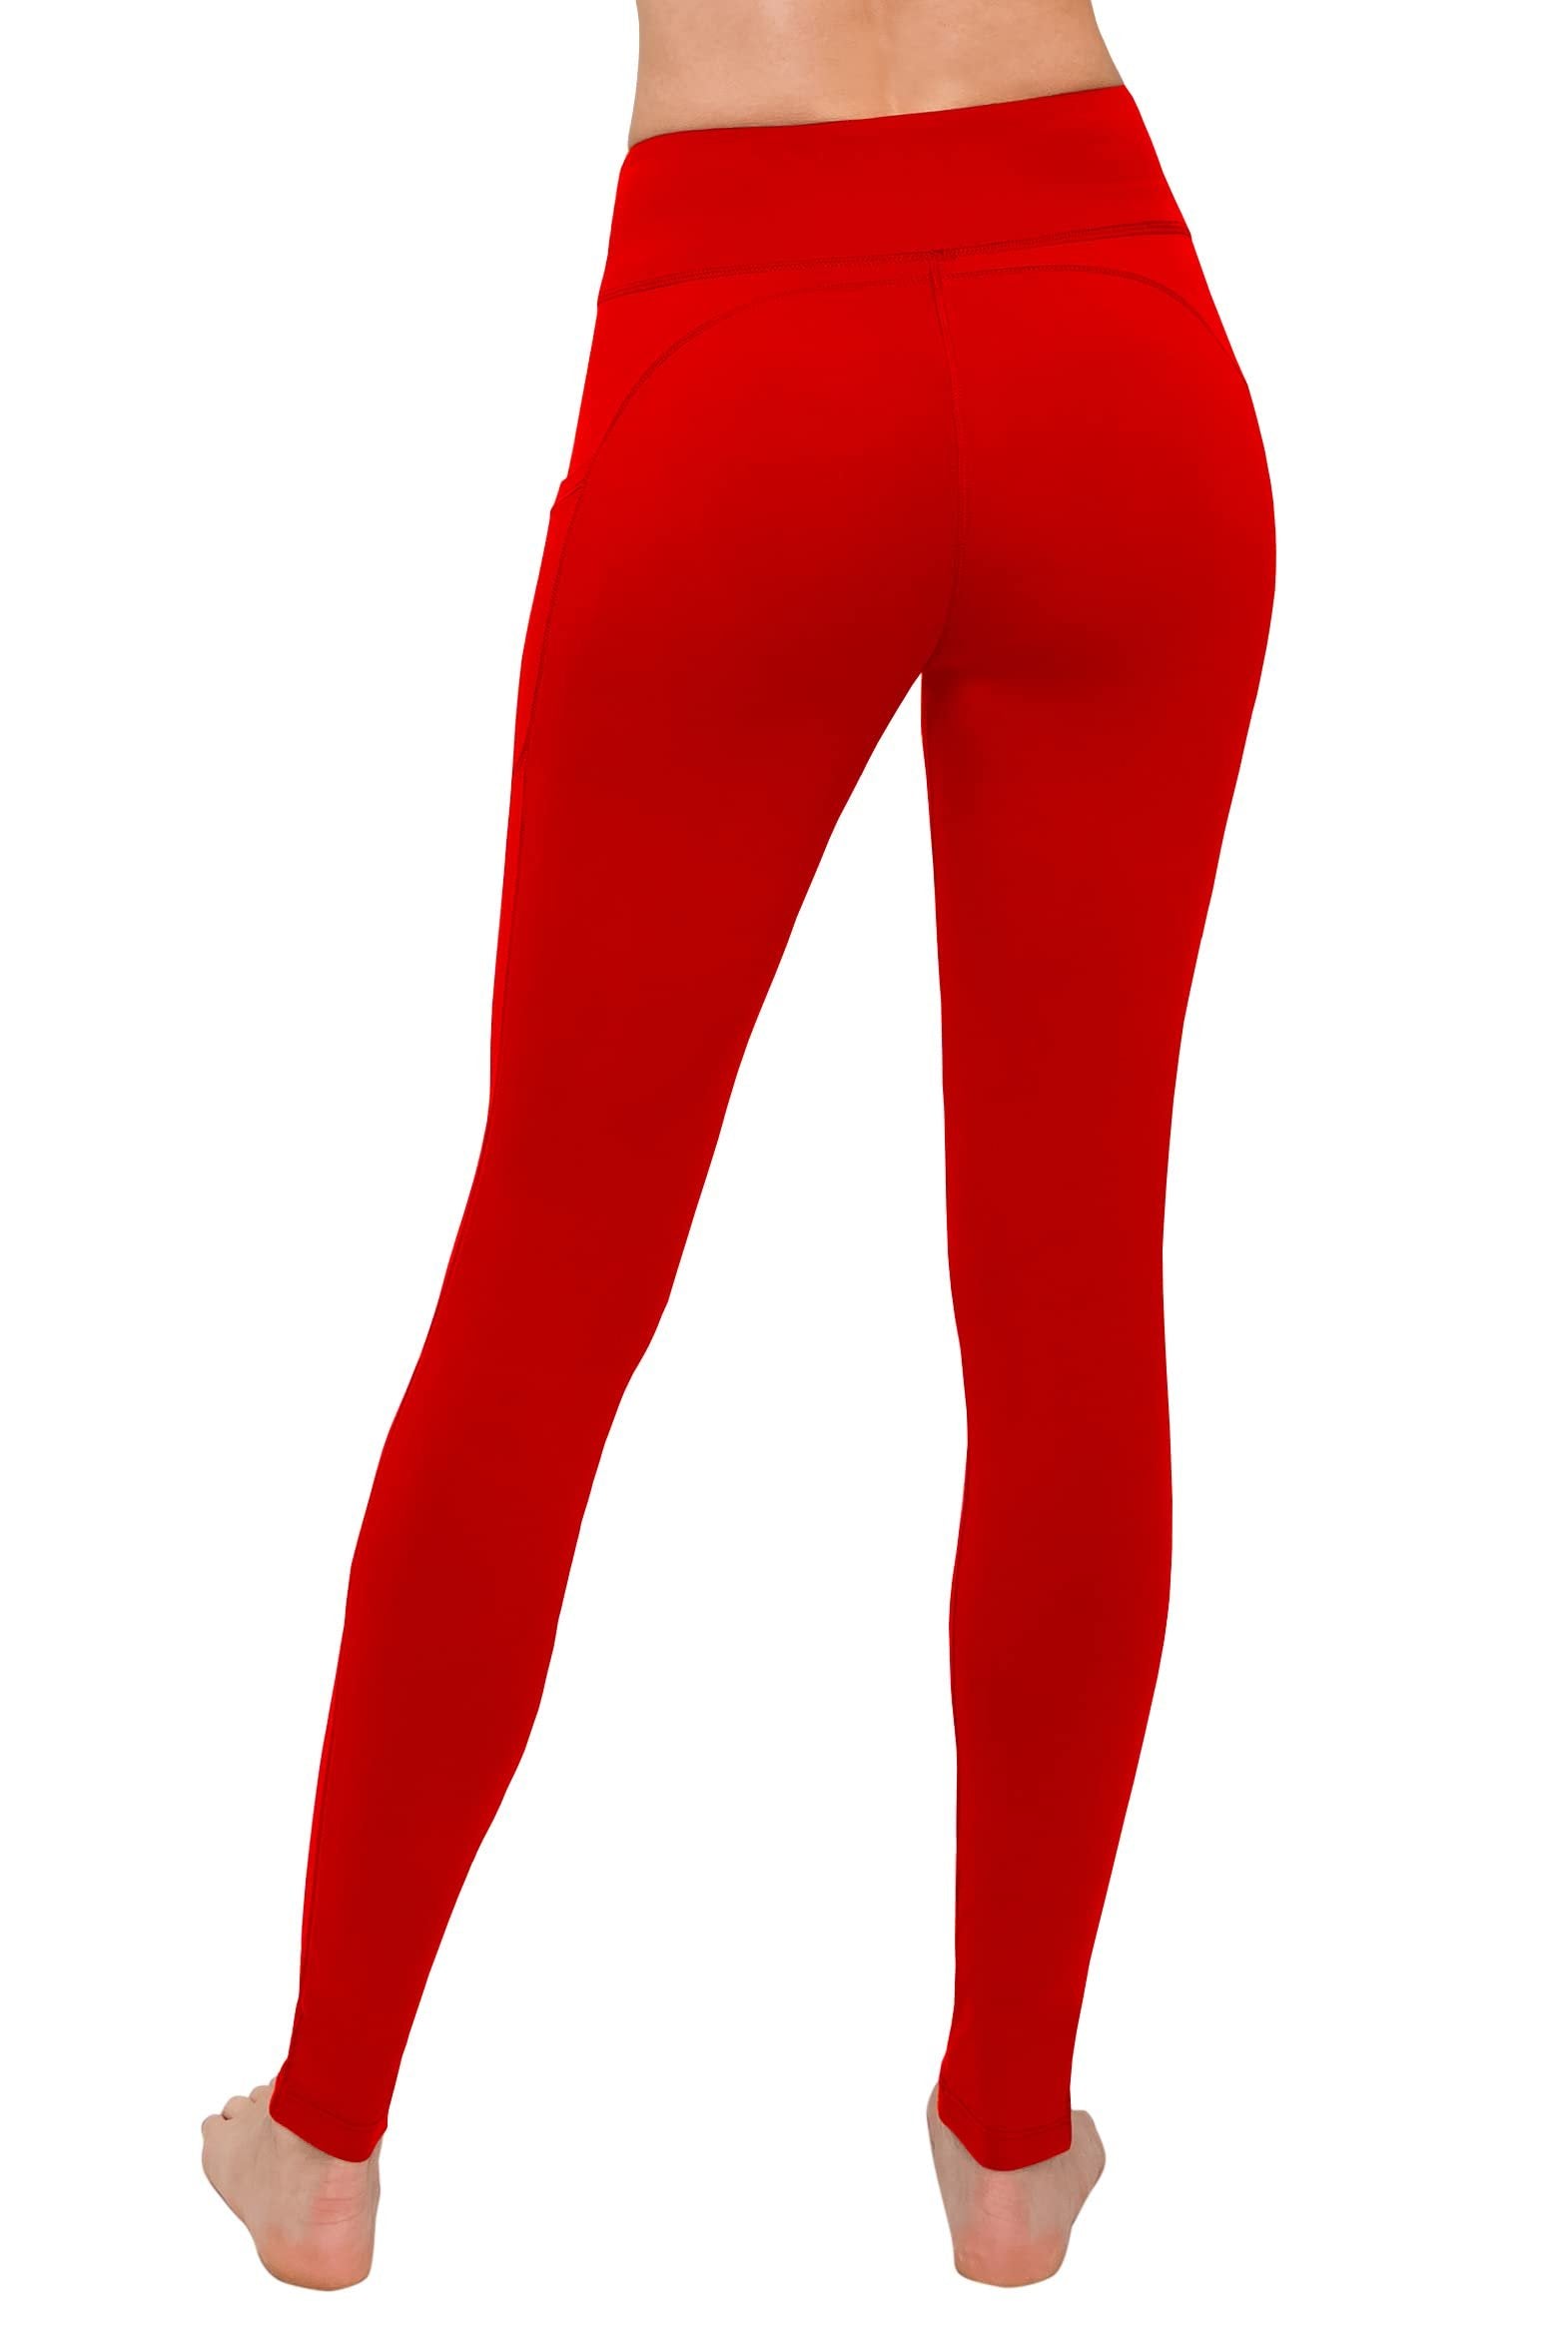 Red SATINA High Waisted Leggings w/ Pockets - Plus & Regular Size - Yoga Workout | 3 Waistband - Free Shipping